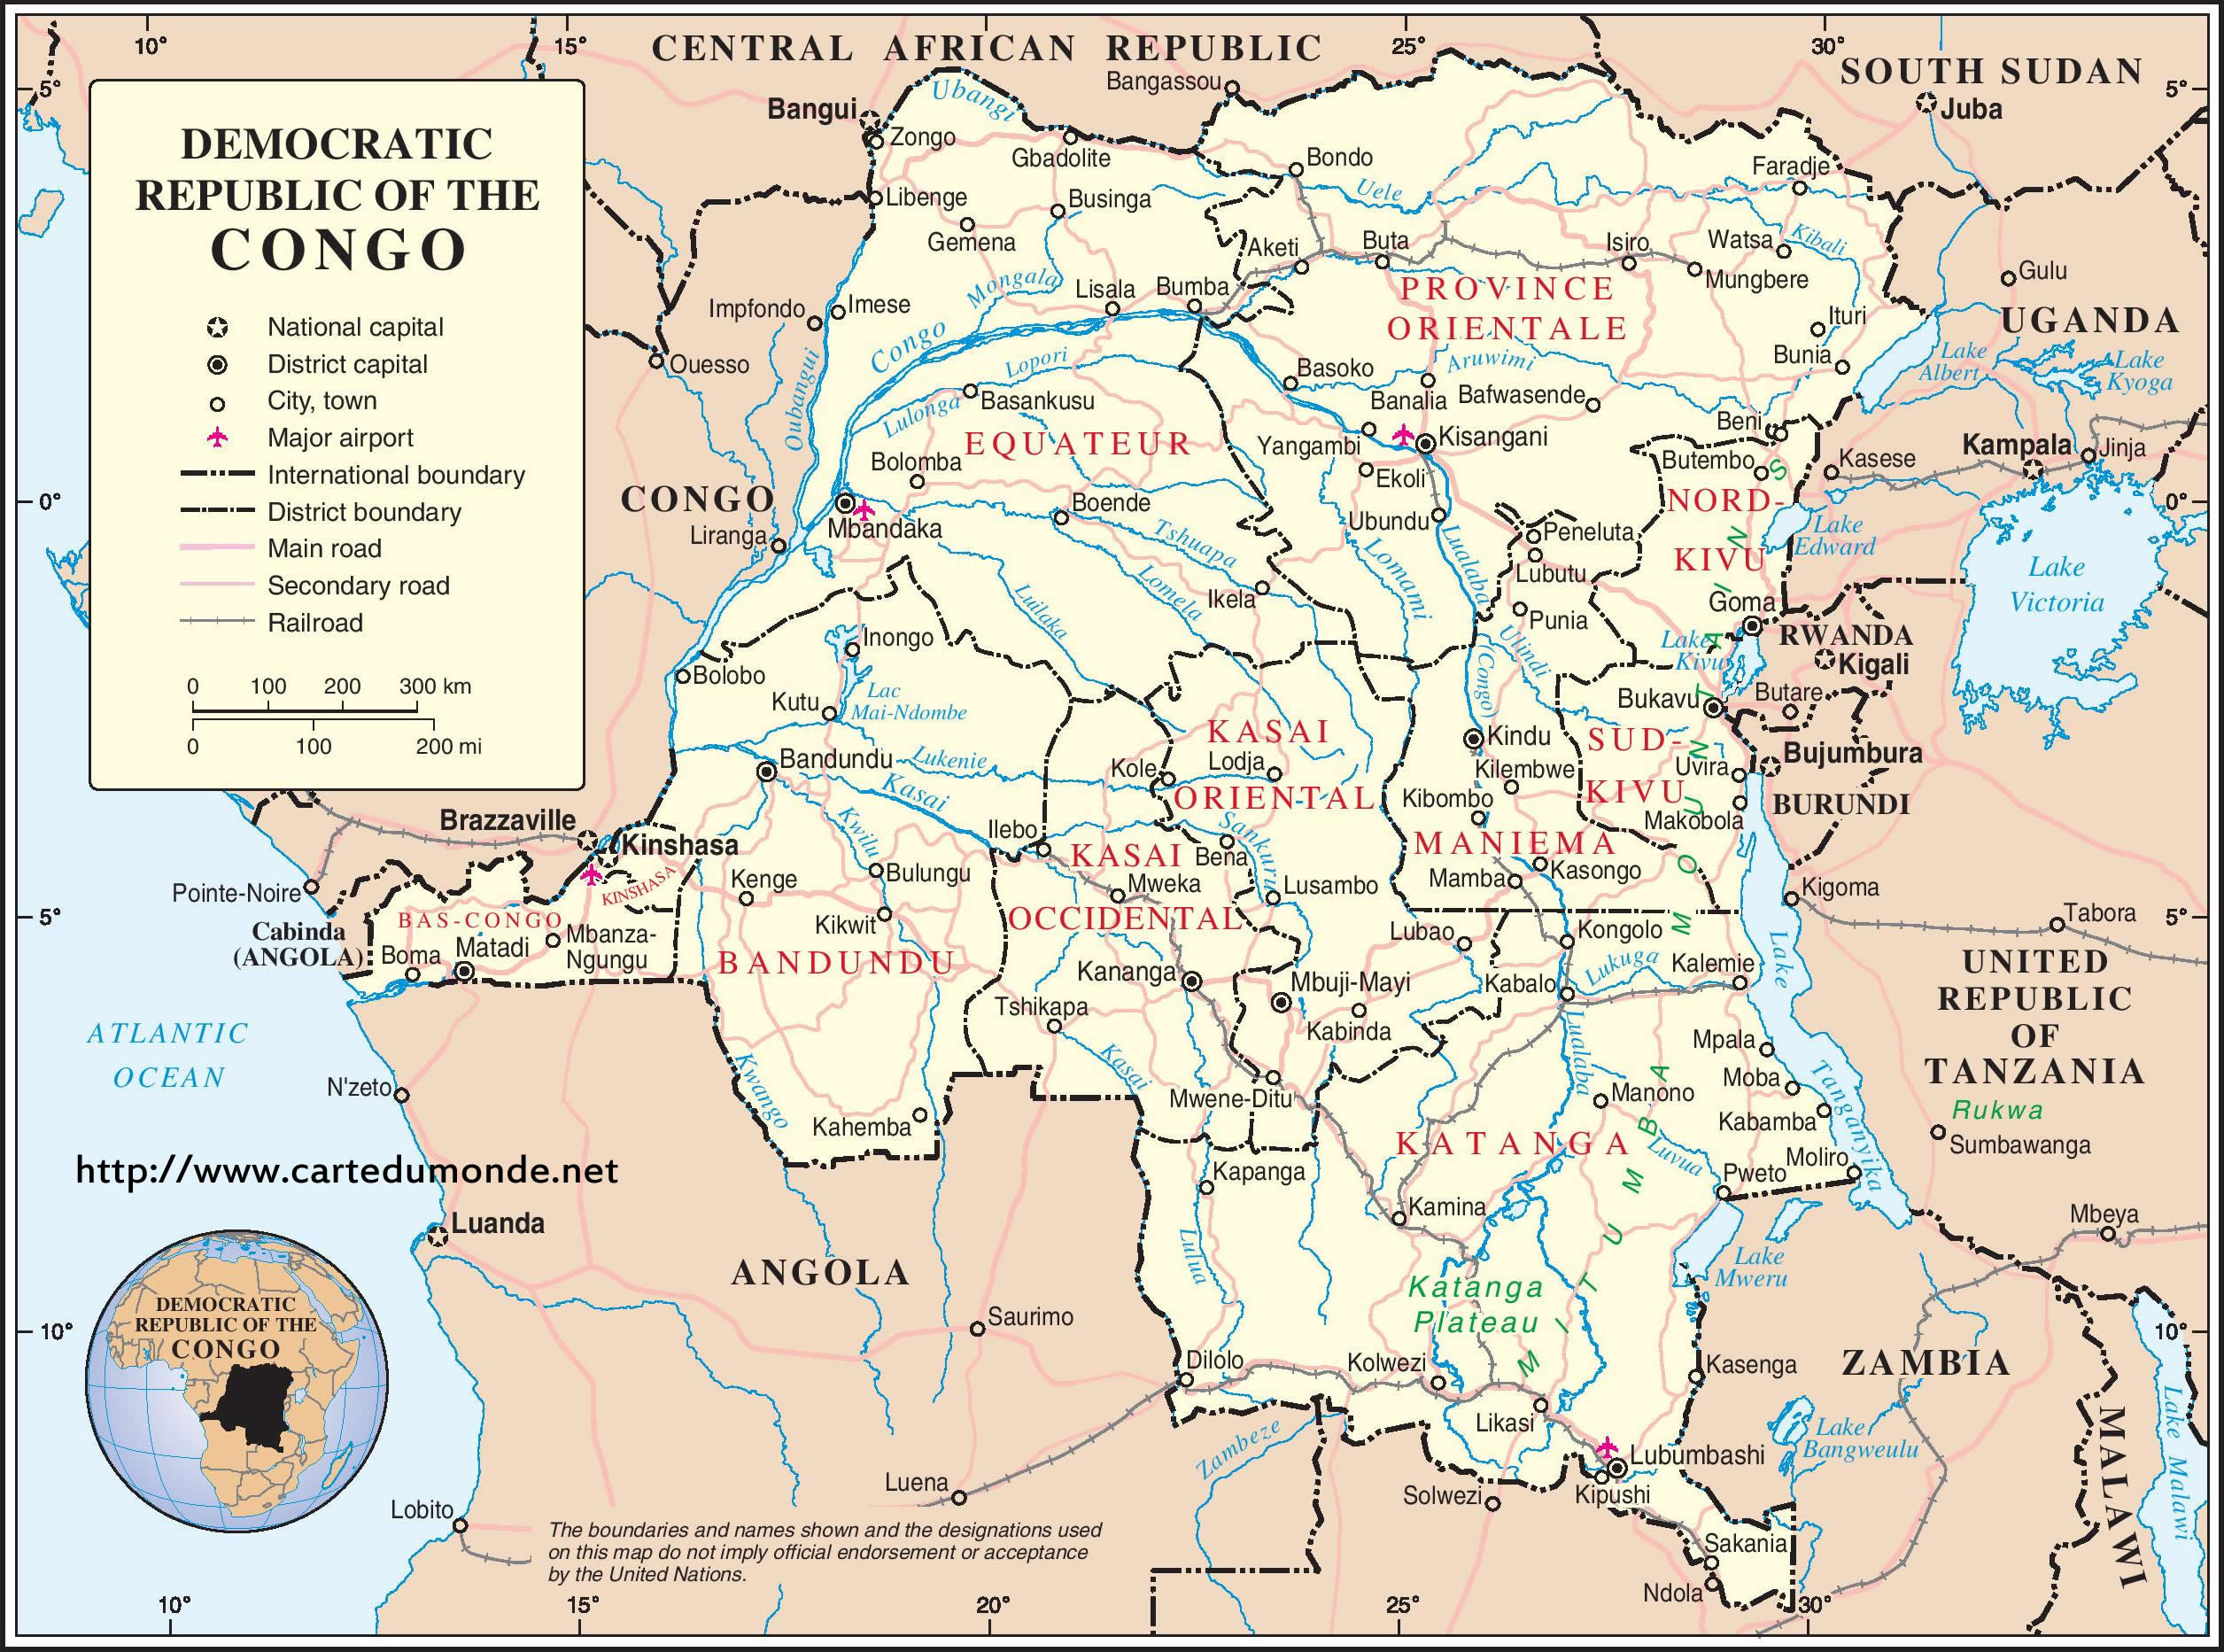 (Democratic Republic of the Congo)